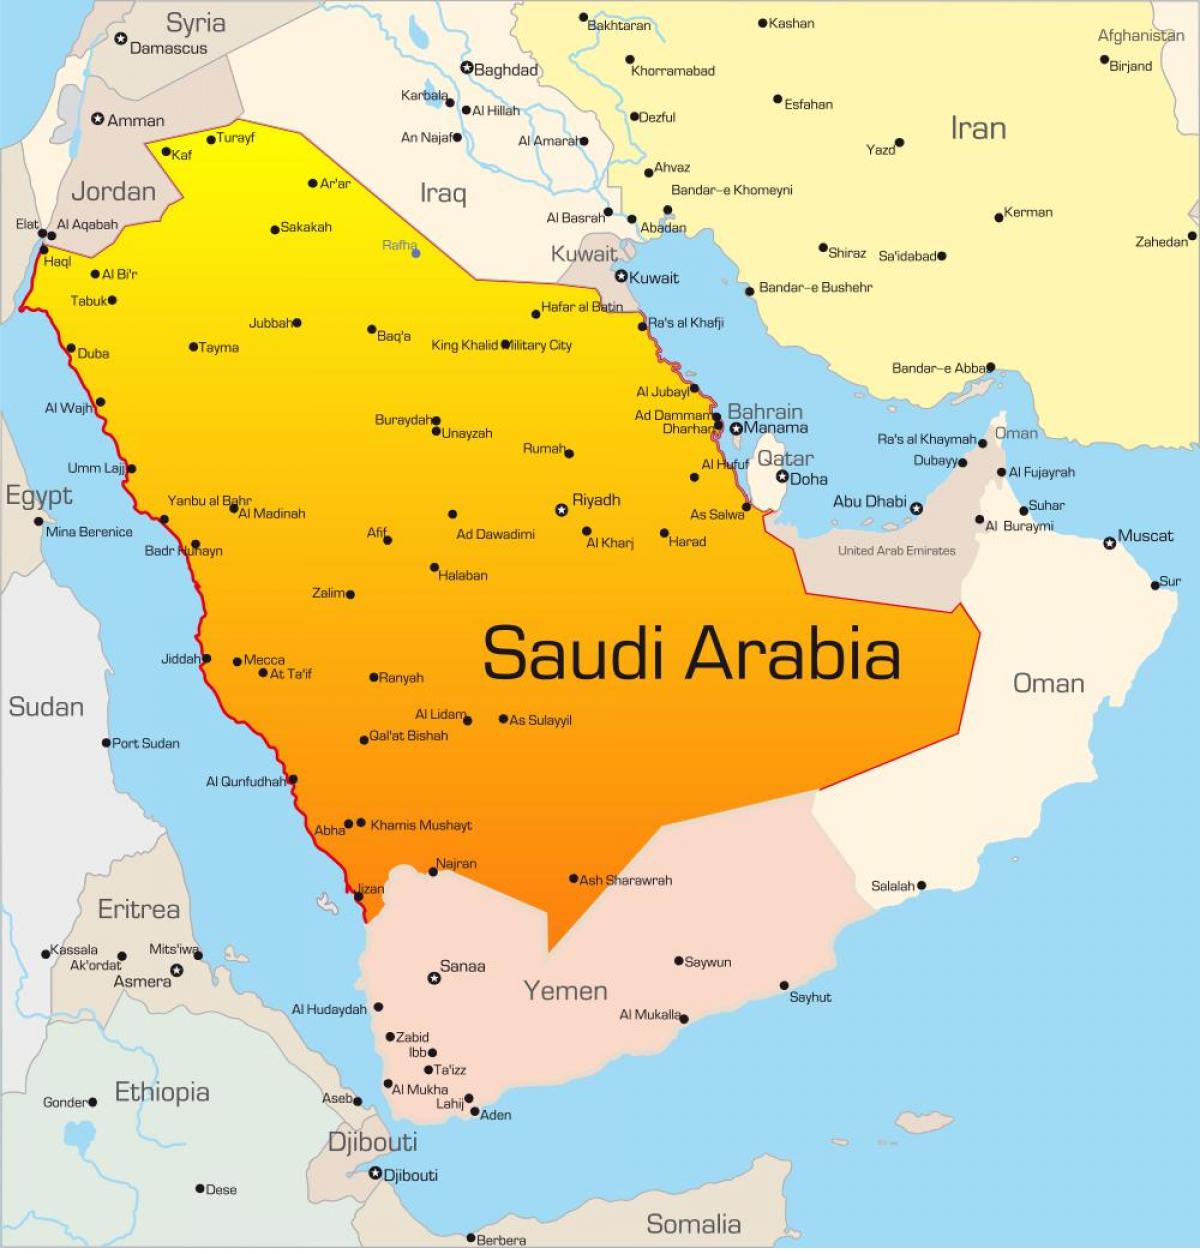 Mekka, saudi-Arabien Karte